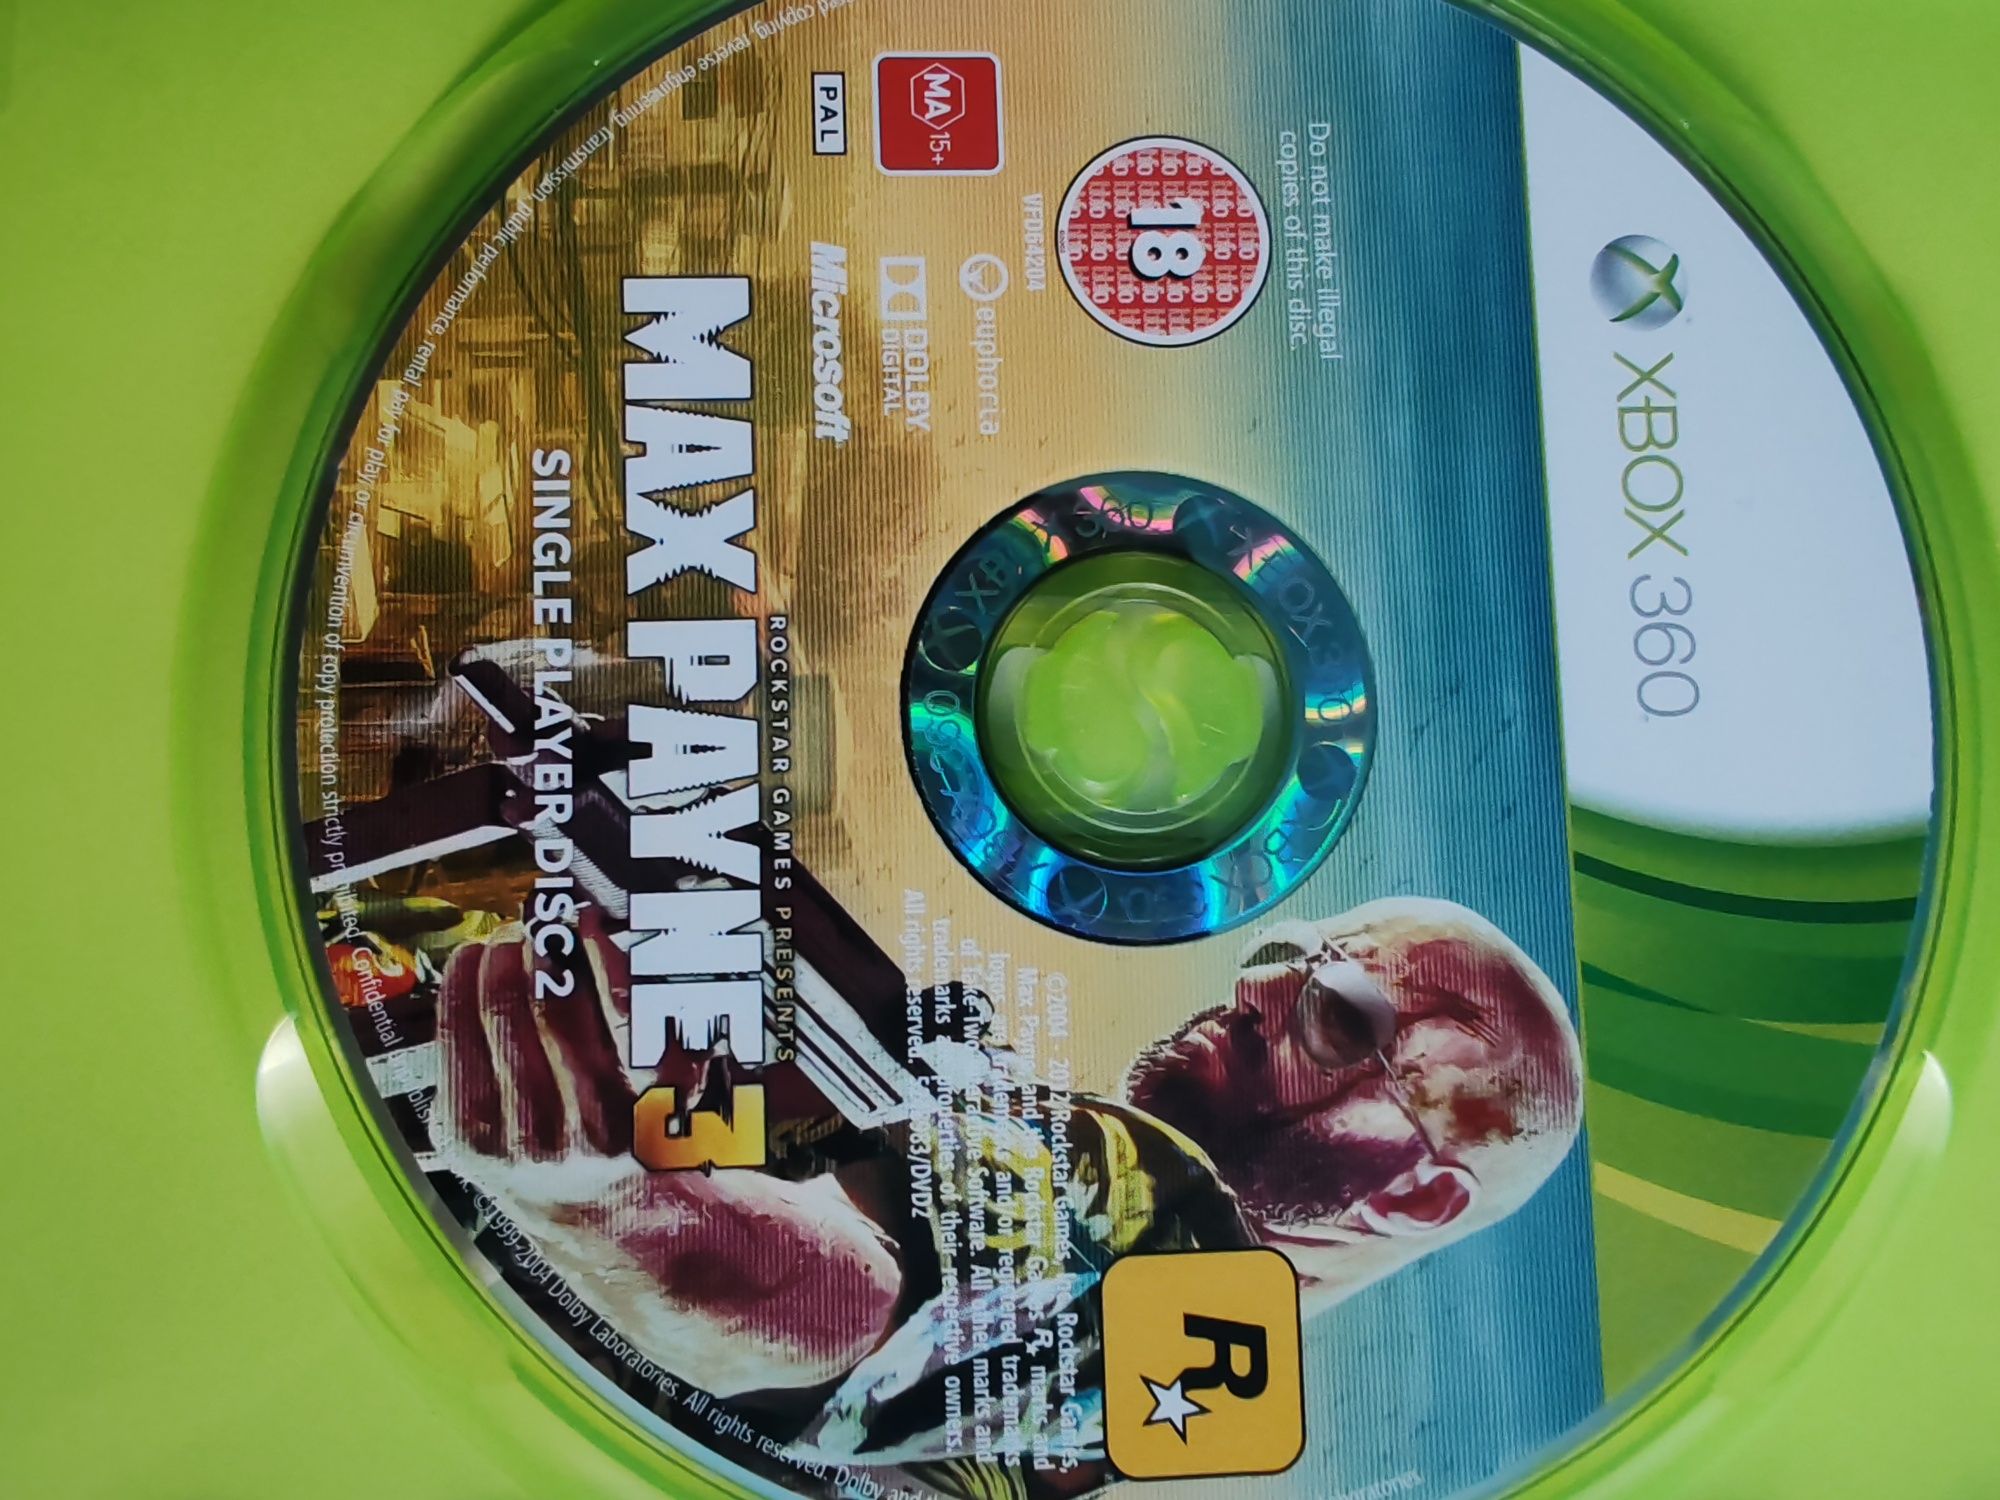 Gra Max Payne 3 Xbox 360